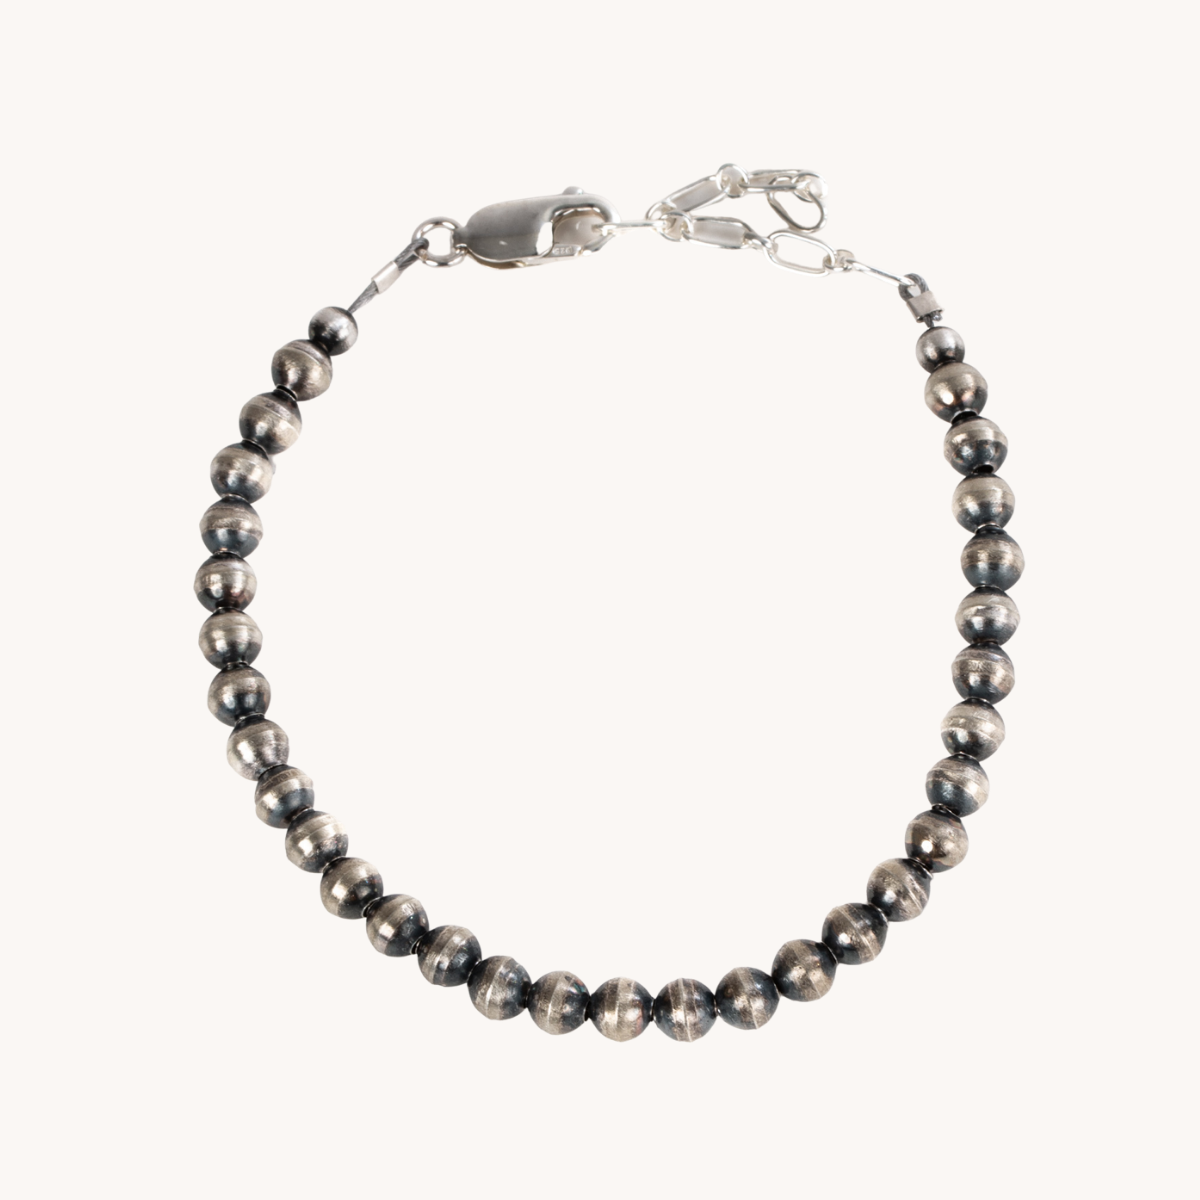 Minimalist Silver Beads Bracelet